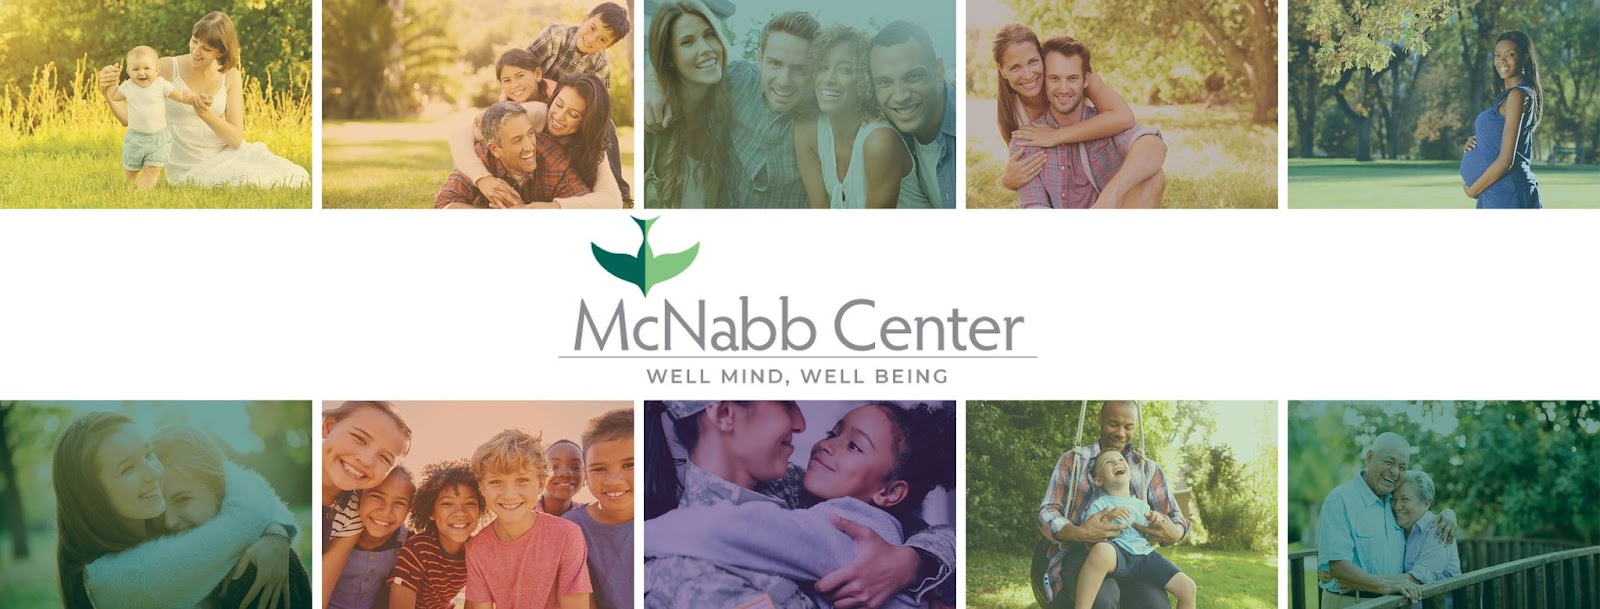 Helen Ross McNabb Center - Blount County Community Enrichment Annex